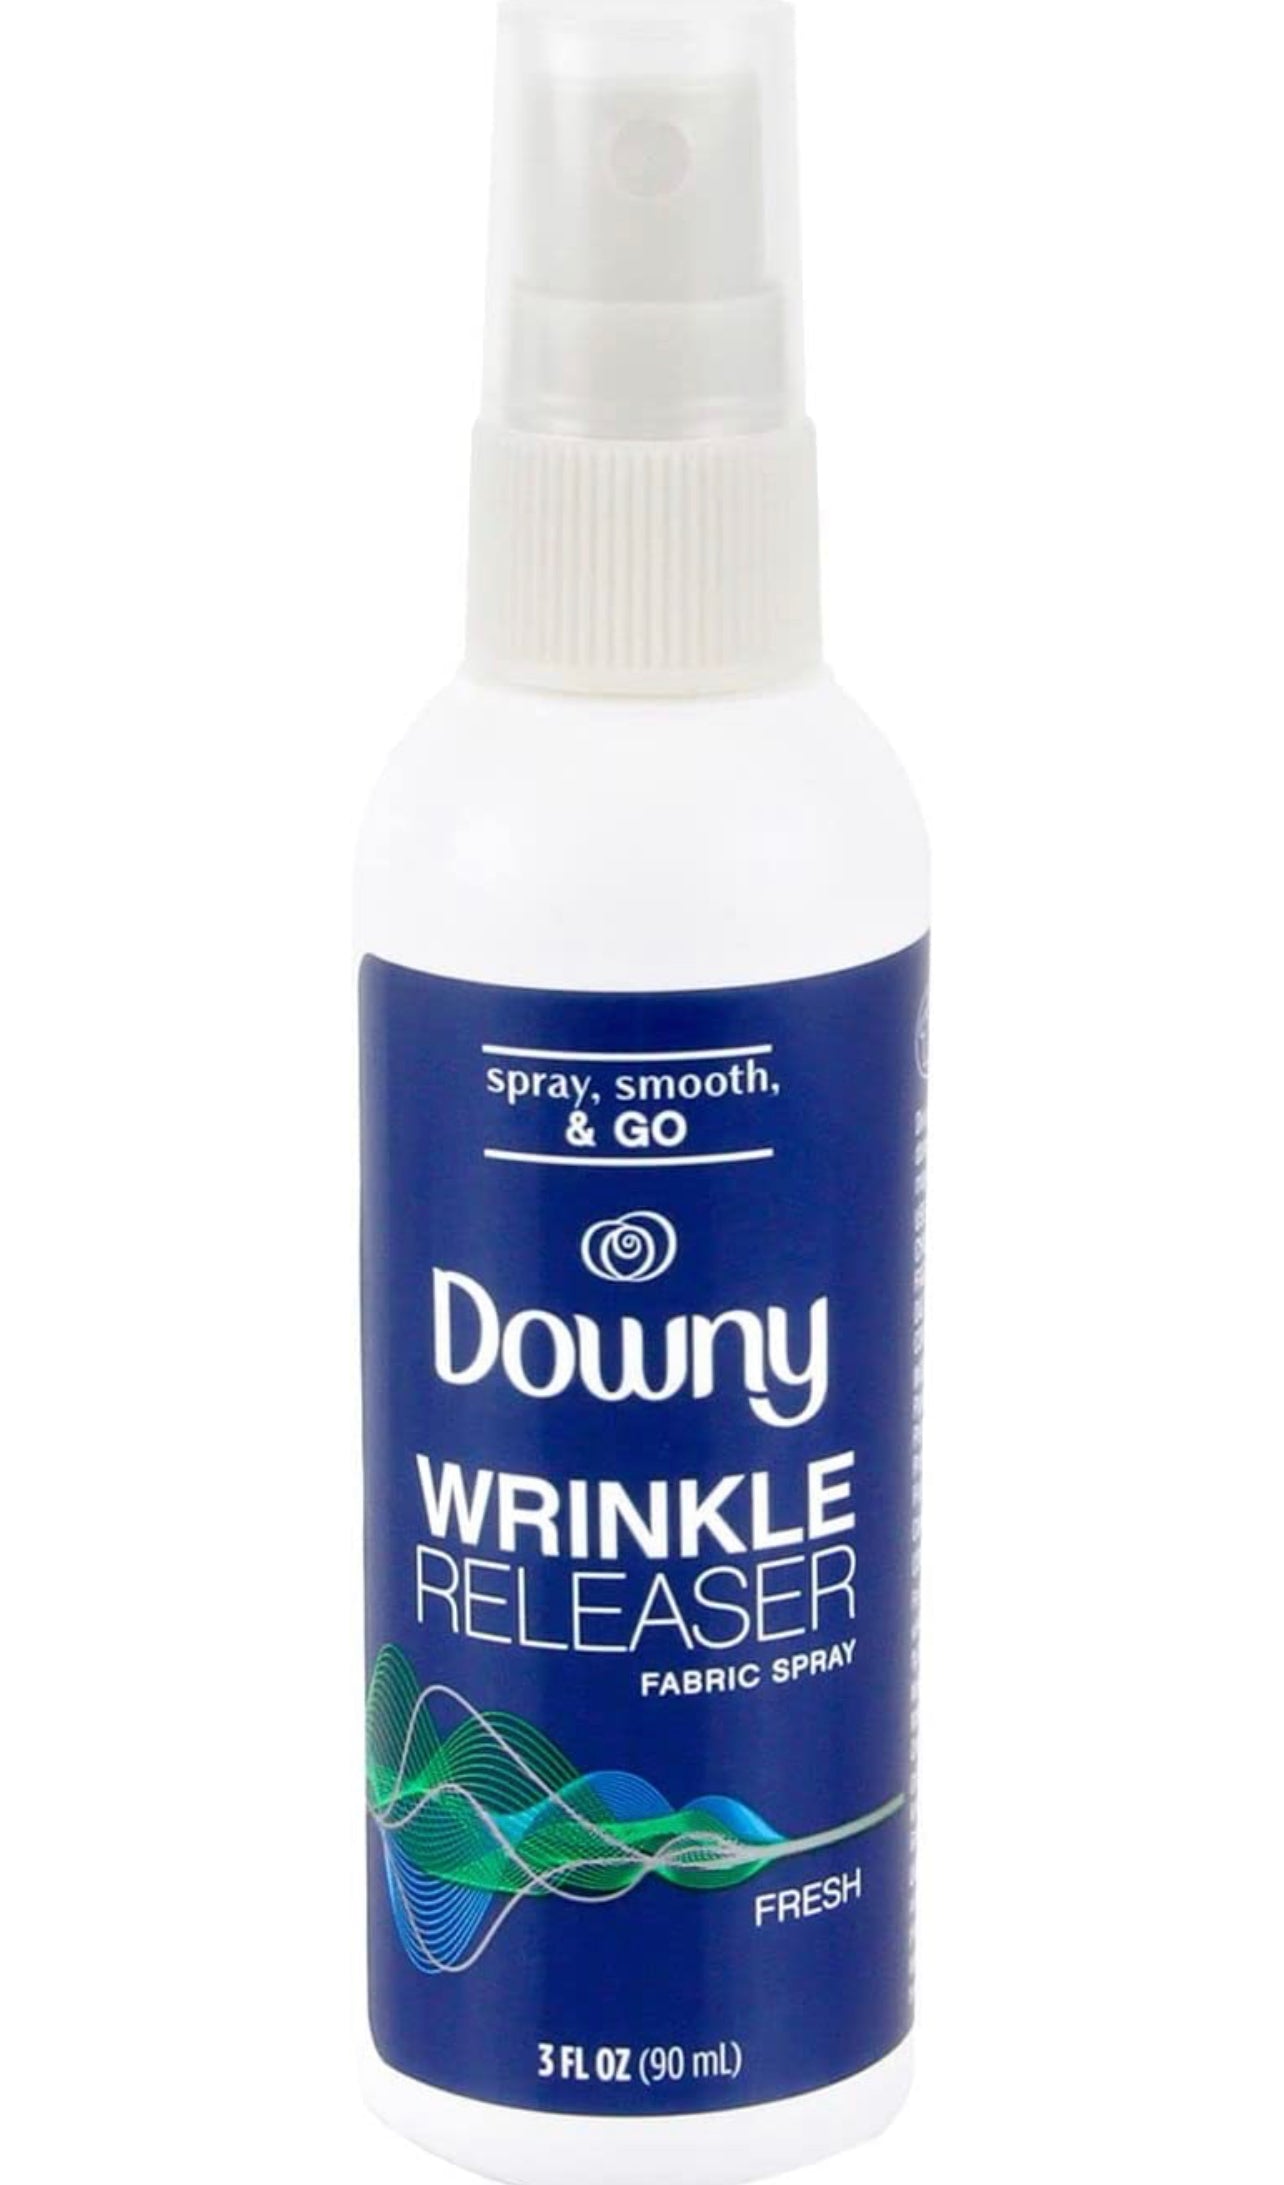 Downy Wrinkle Release Wrinkle Releaser Spray, Light Fresh Scent, Travel Size, 90ml - MyTravelShop.ca